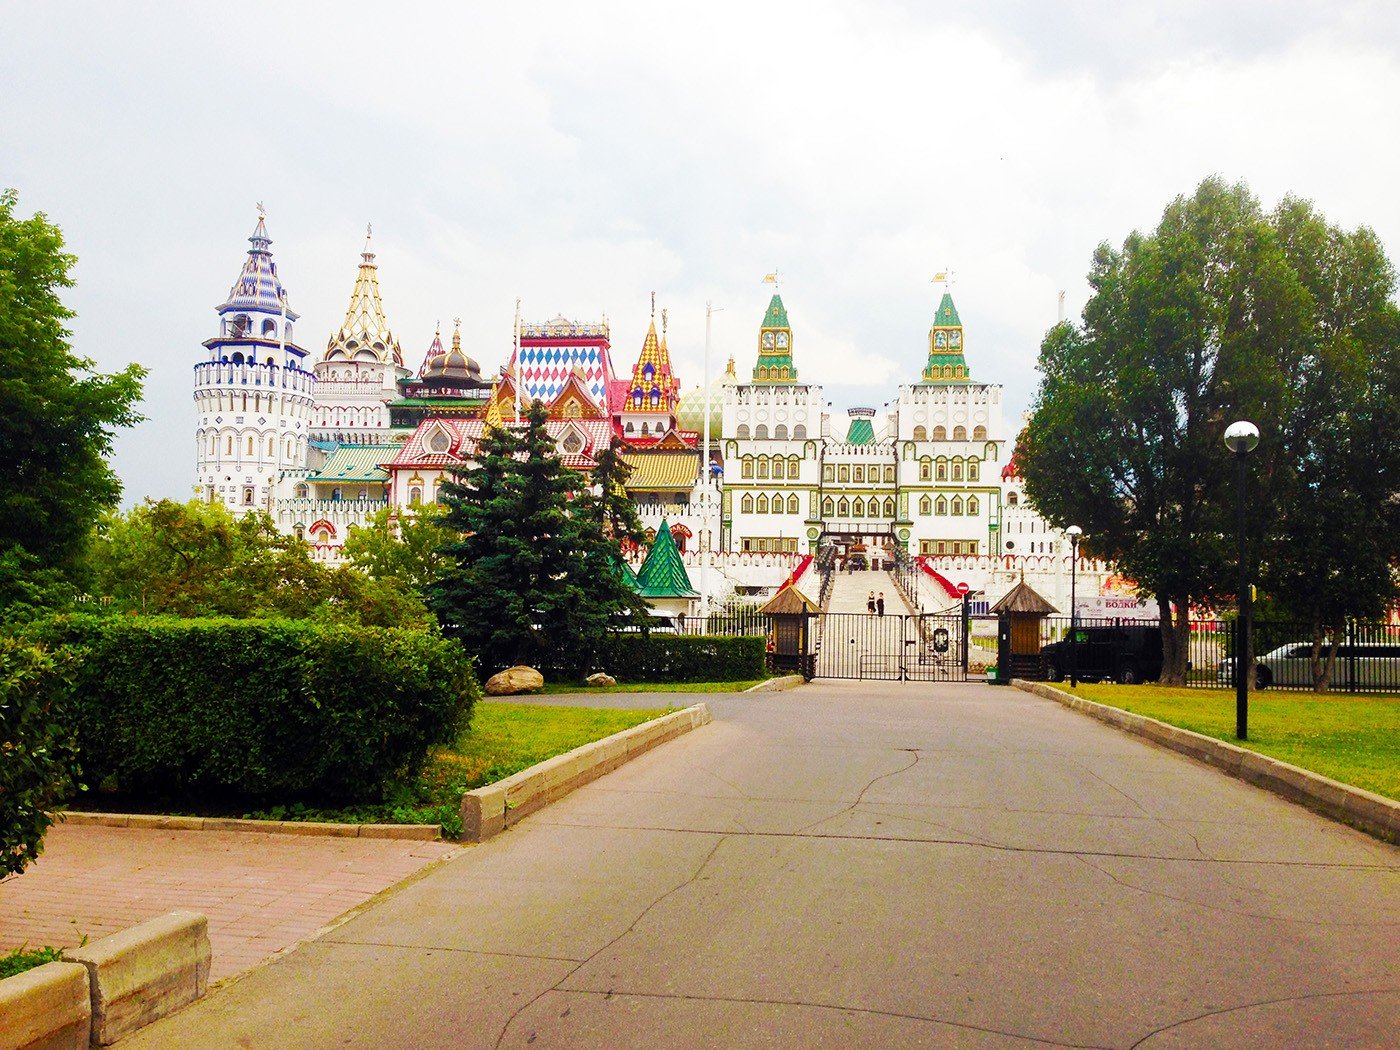 Парк Измайлово. Измайловский парк Москва. Измайловский парк Измайлово. Москва Измайлово Кремль и парк. Evopark измайлово